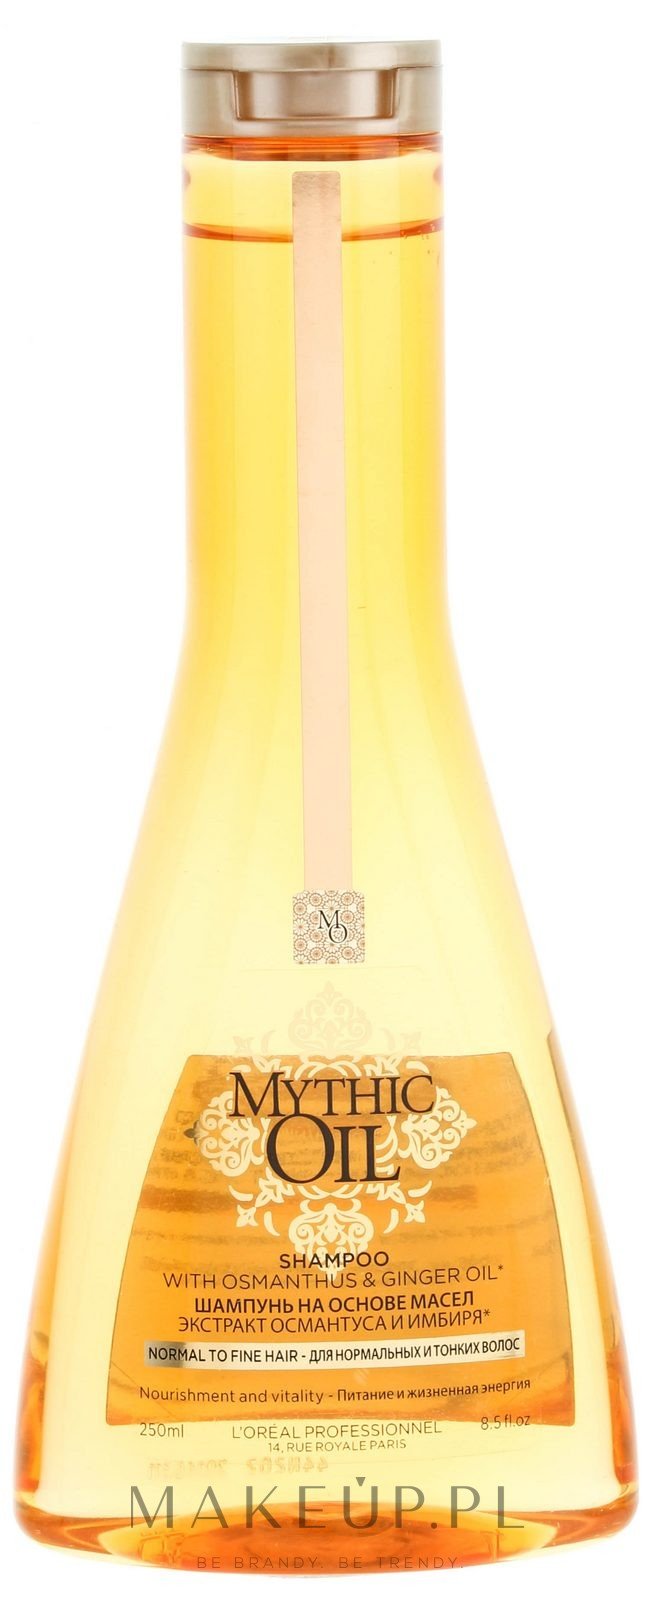 mythic oil osmanthus szampon wizaz